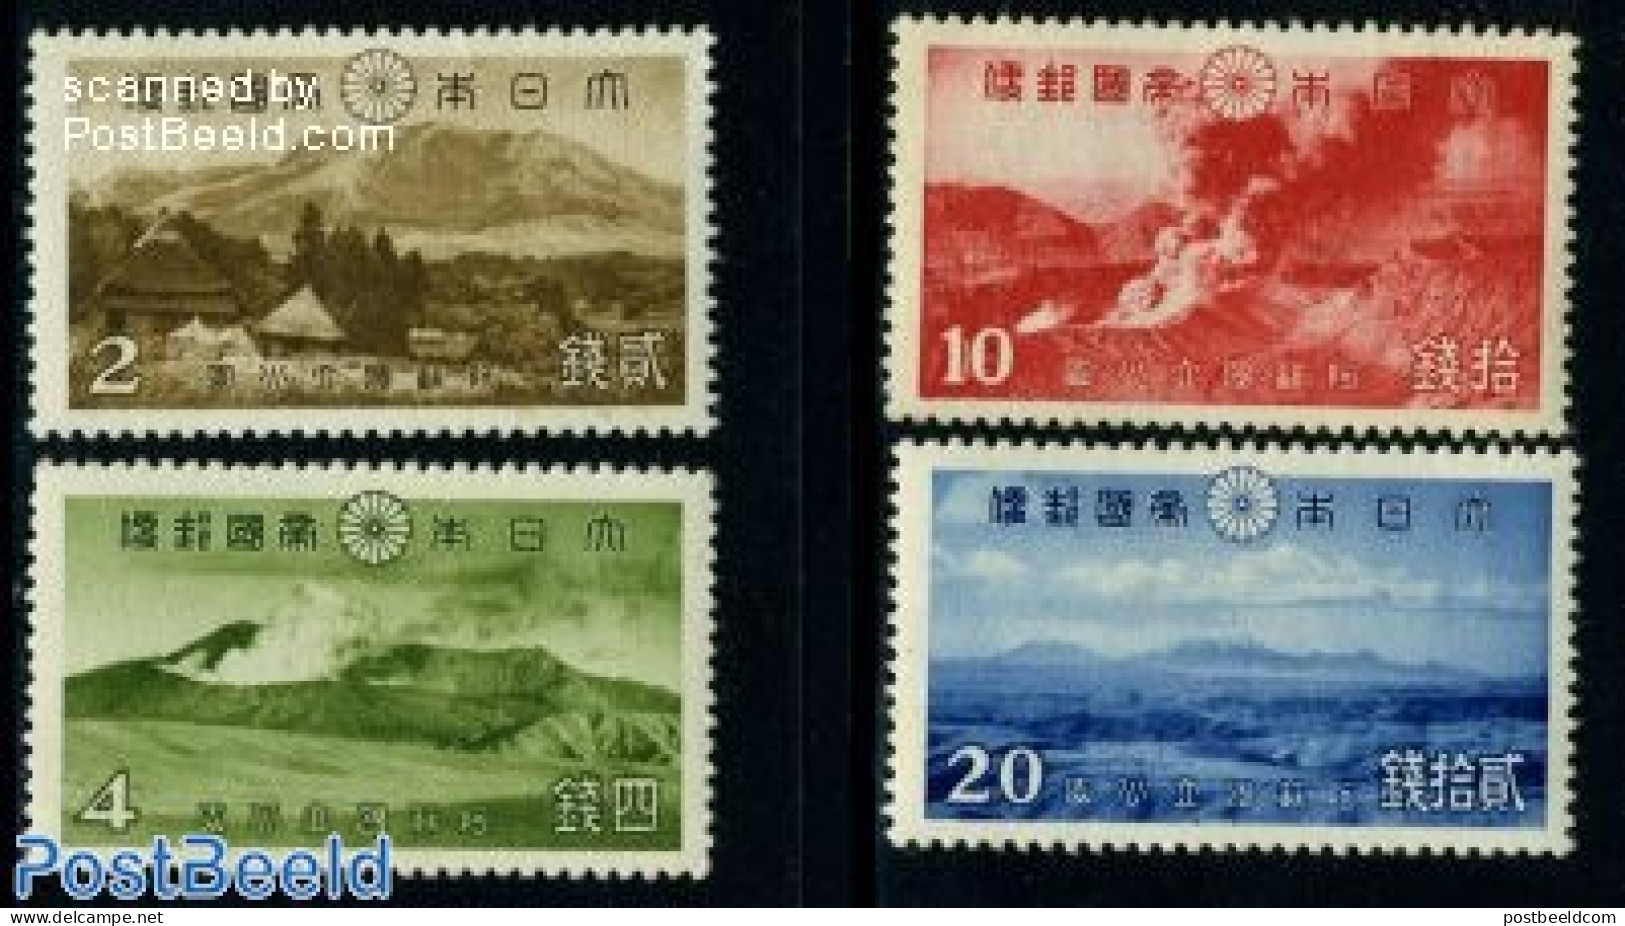 Japan 1939 Landscapes 4v, Mint NH - Nuovi